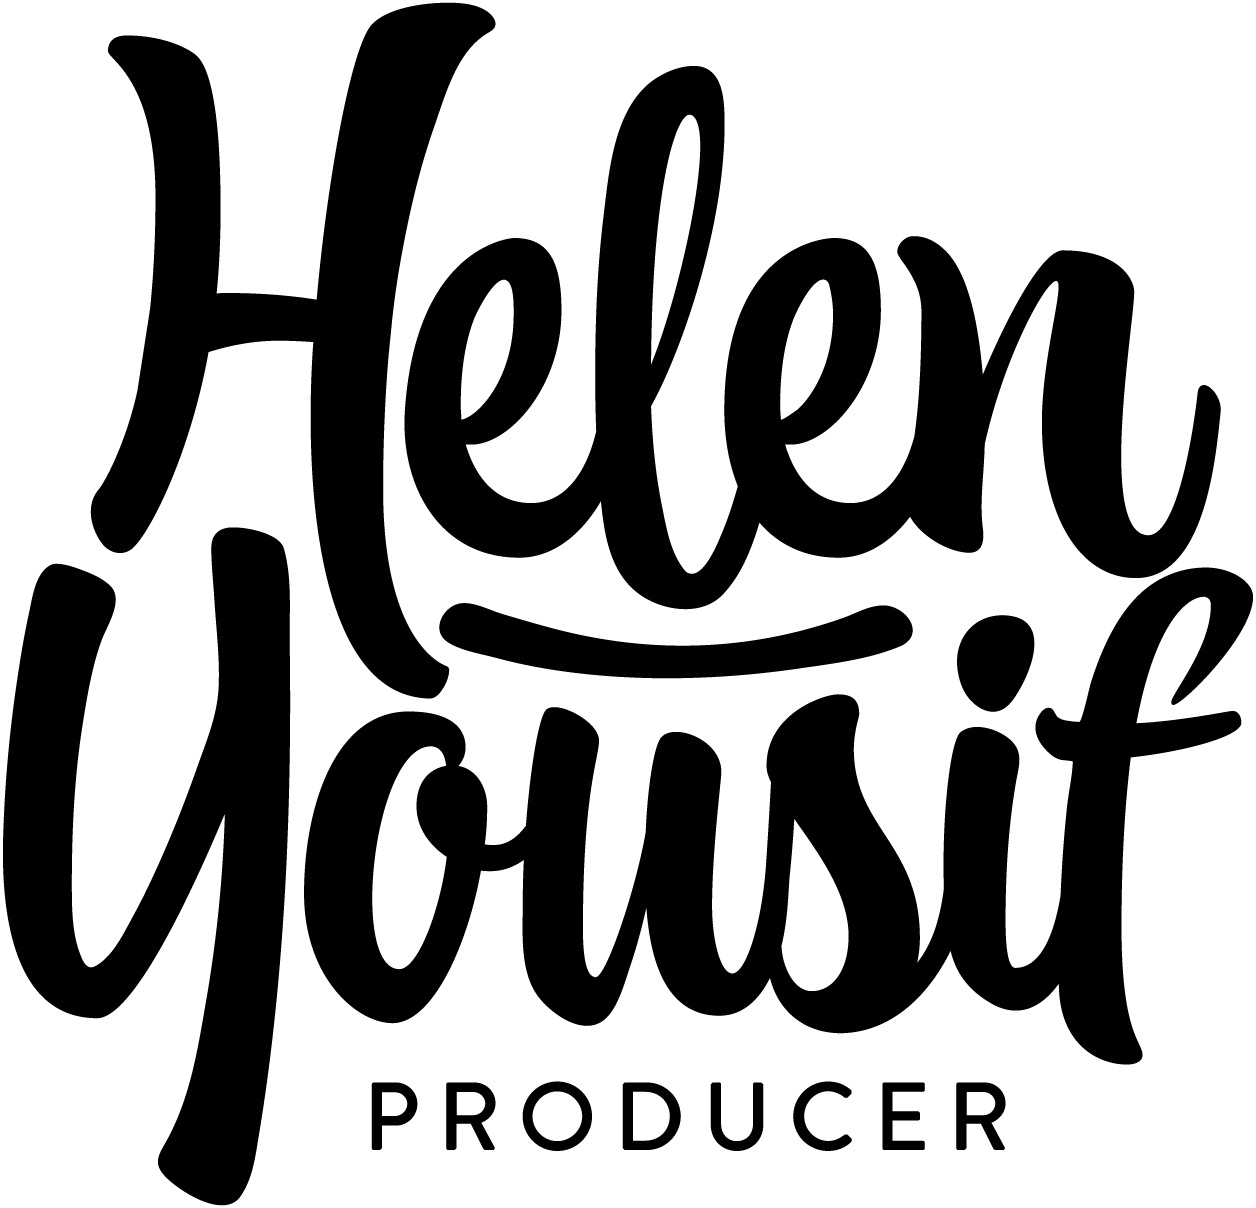 helen yousif producer extraordinaire 